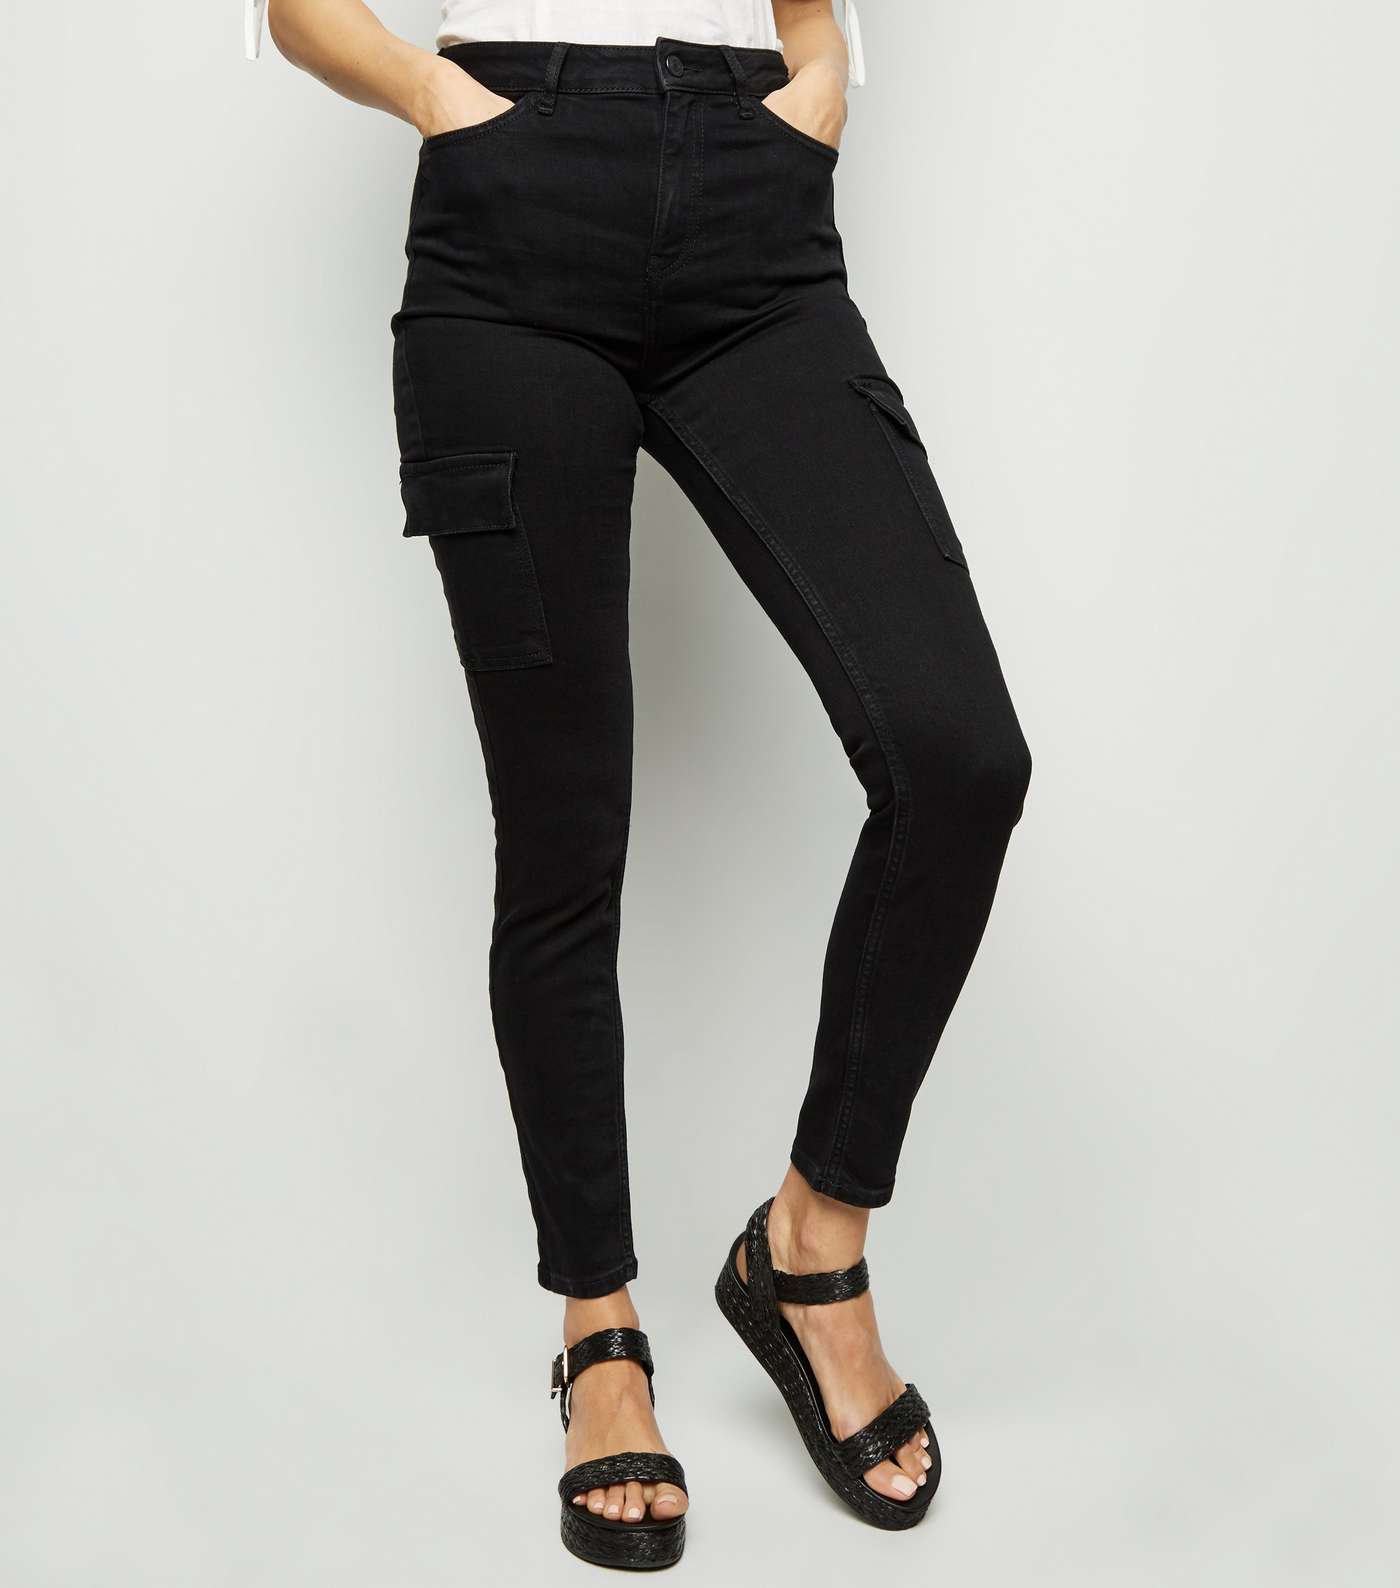 Black Utility Pocket Skinny Jenna Jeans Image 2